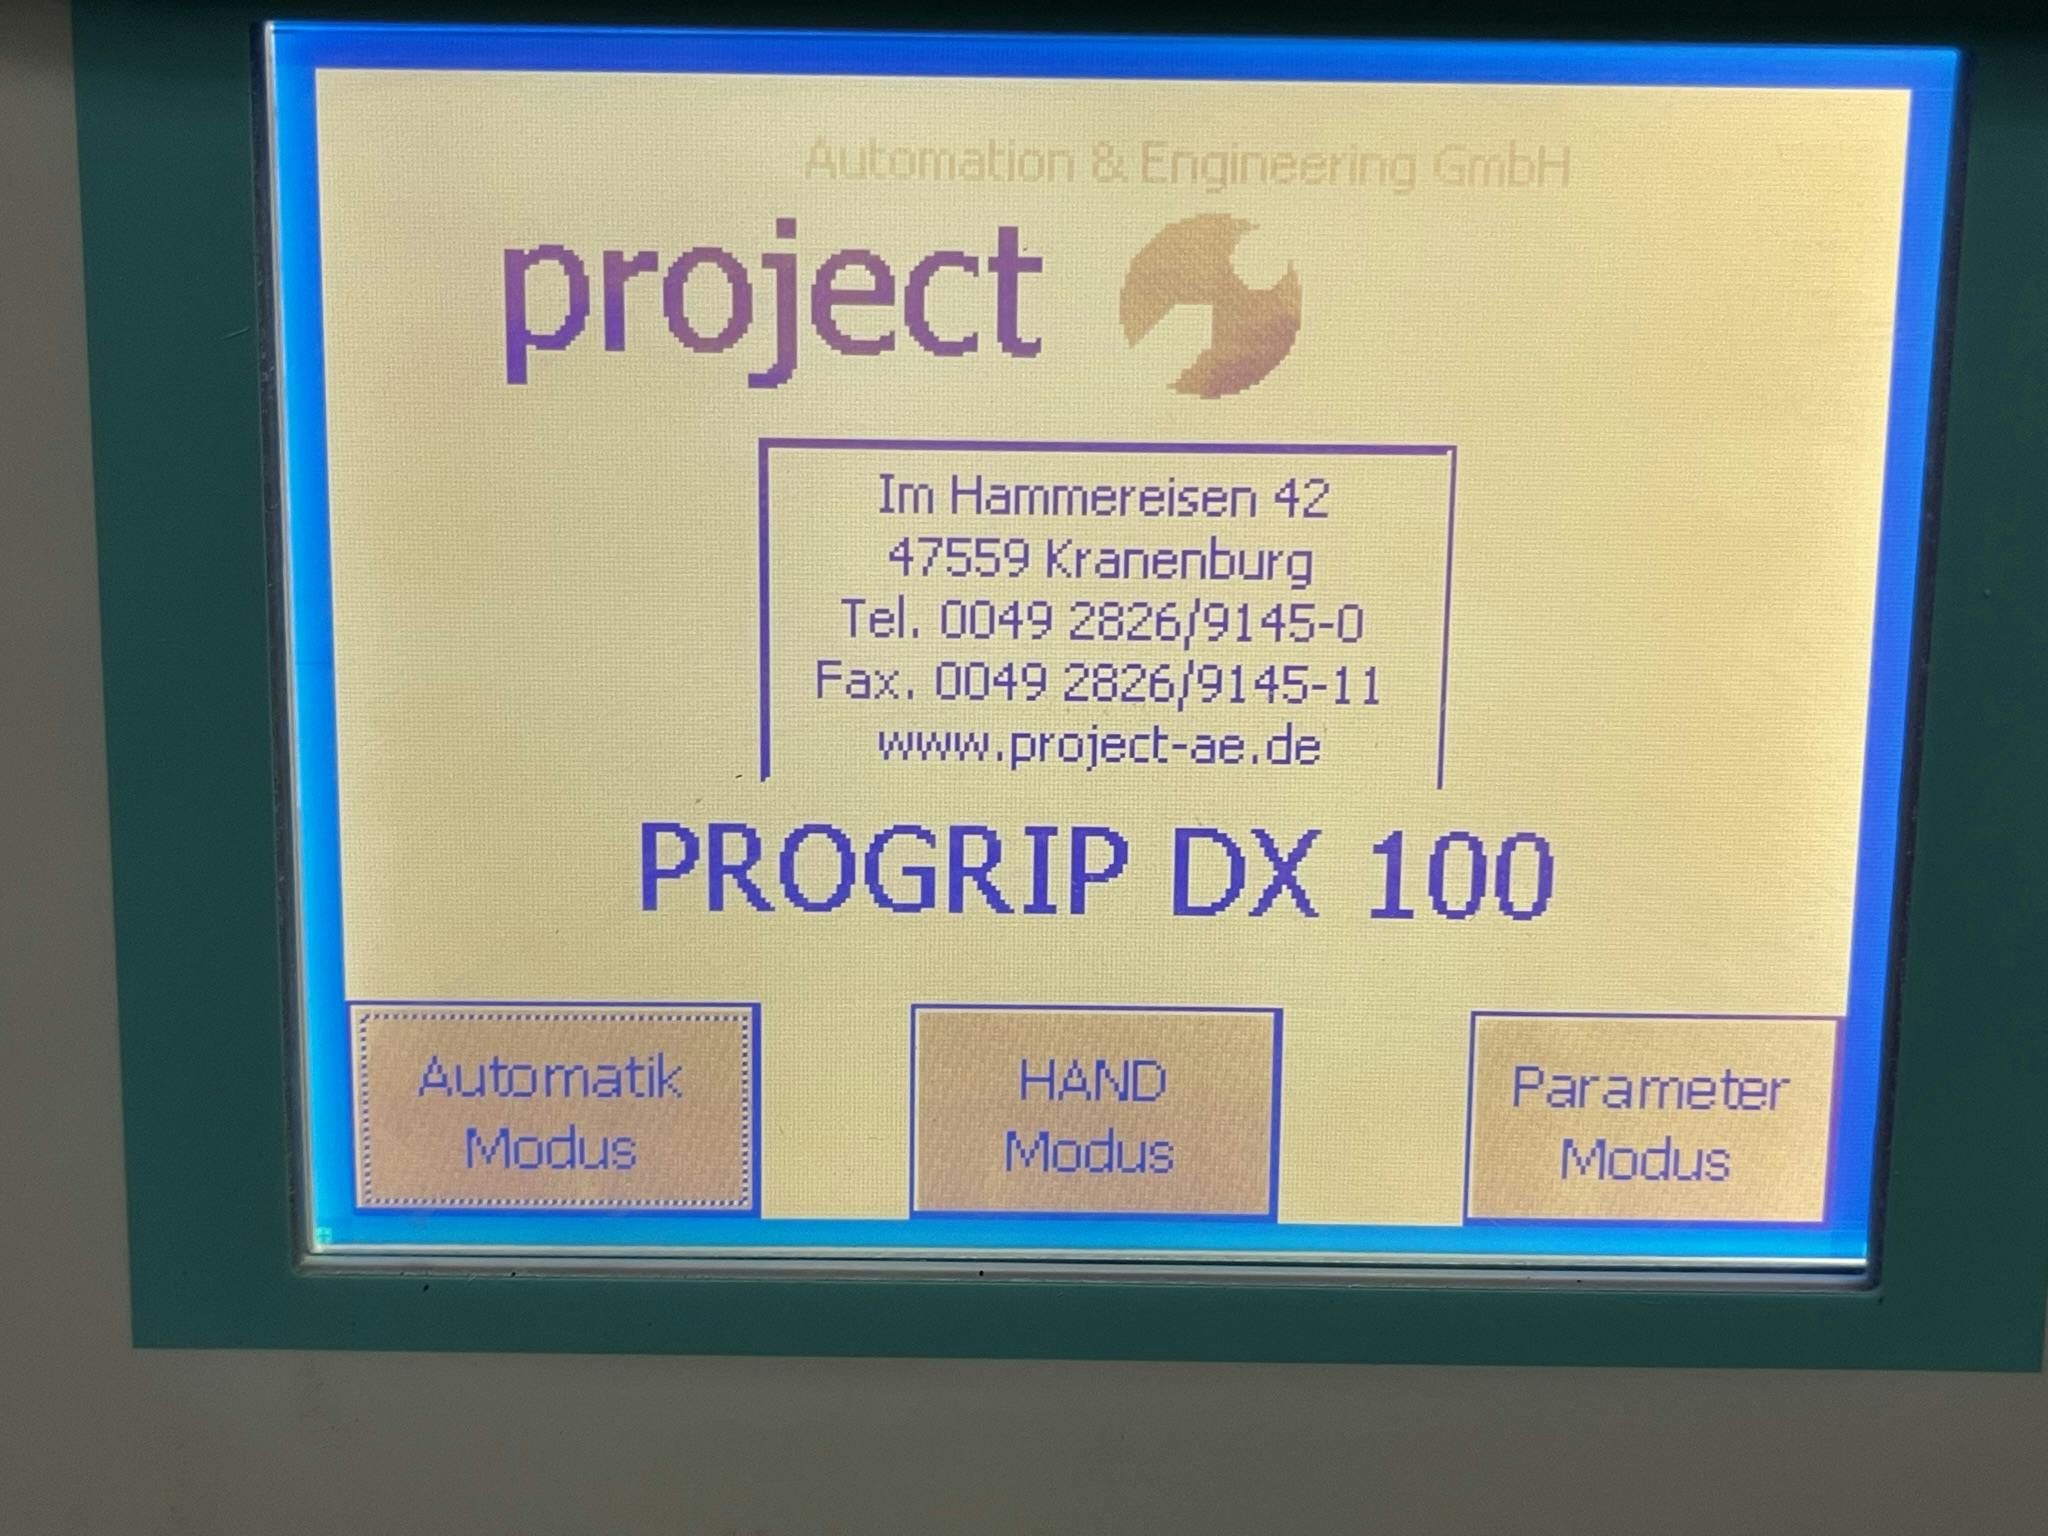 Detalle del proyecto A & E Progrip DX100